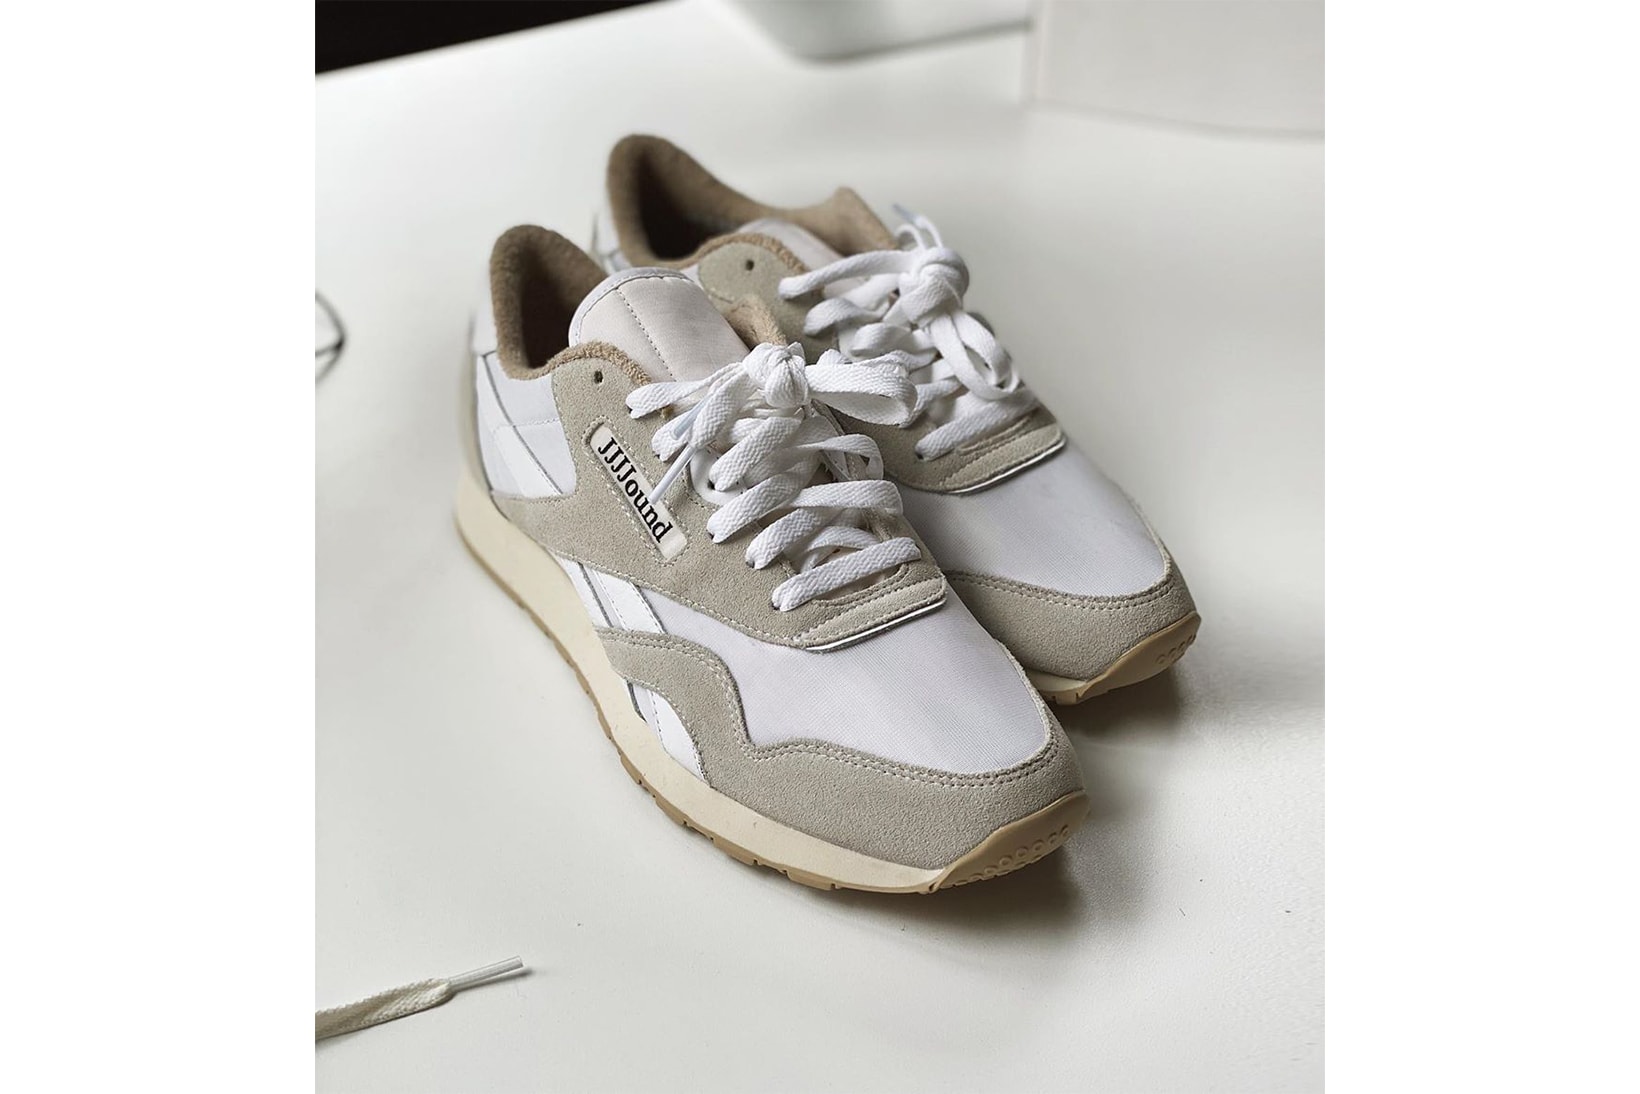 jjjjound reebok collaboration classic nylon sneakers grey white beige colorway shoes footwear sneakerhead